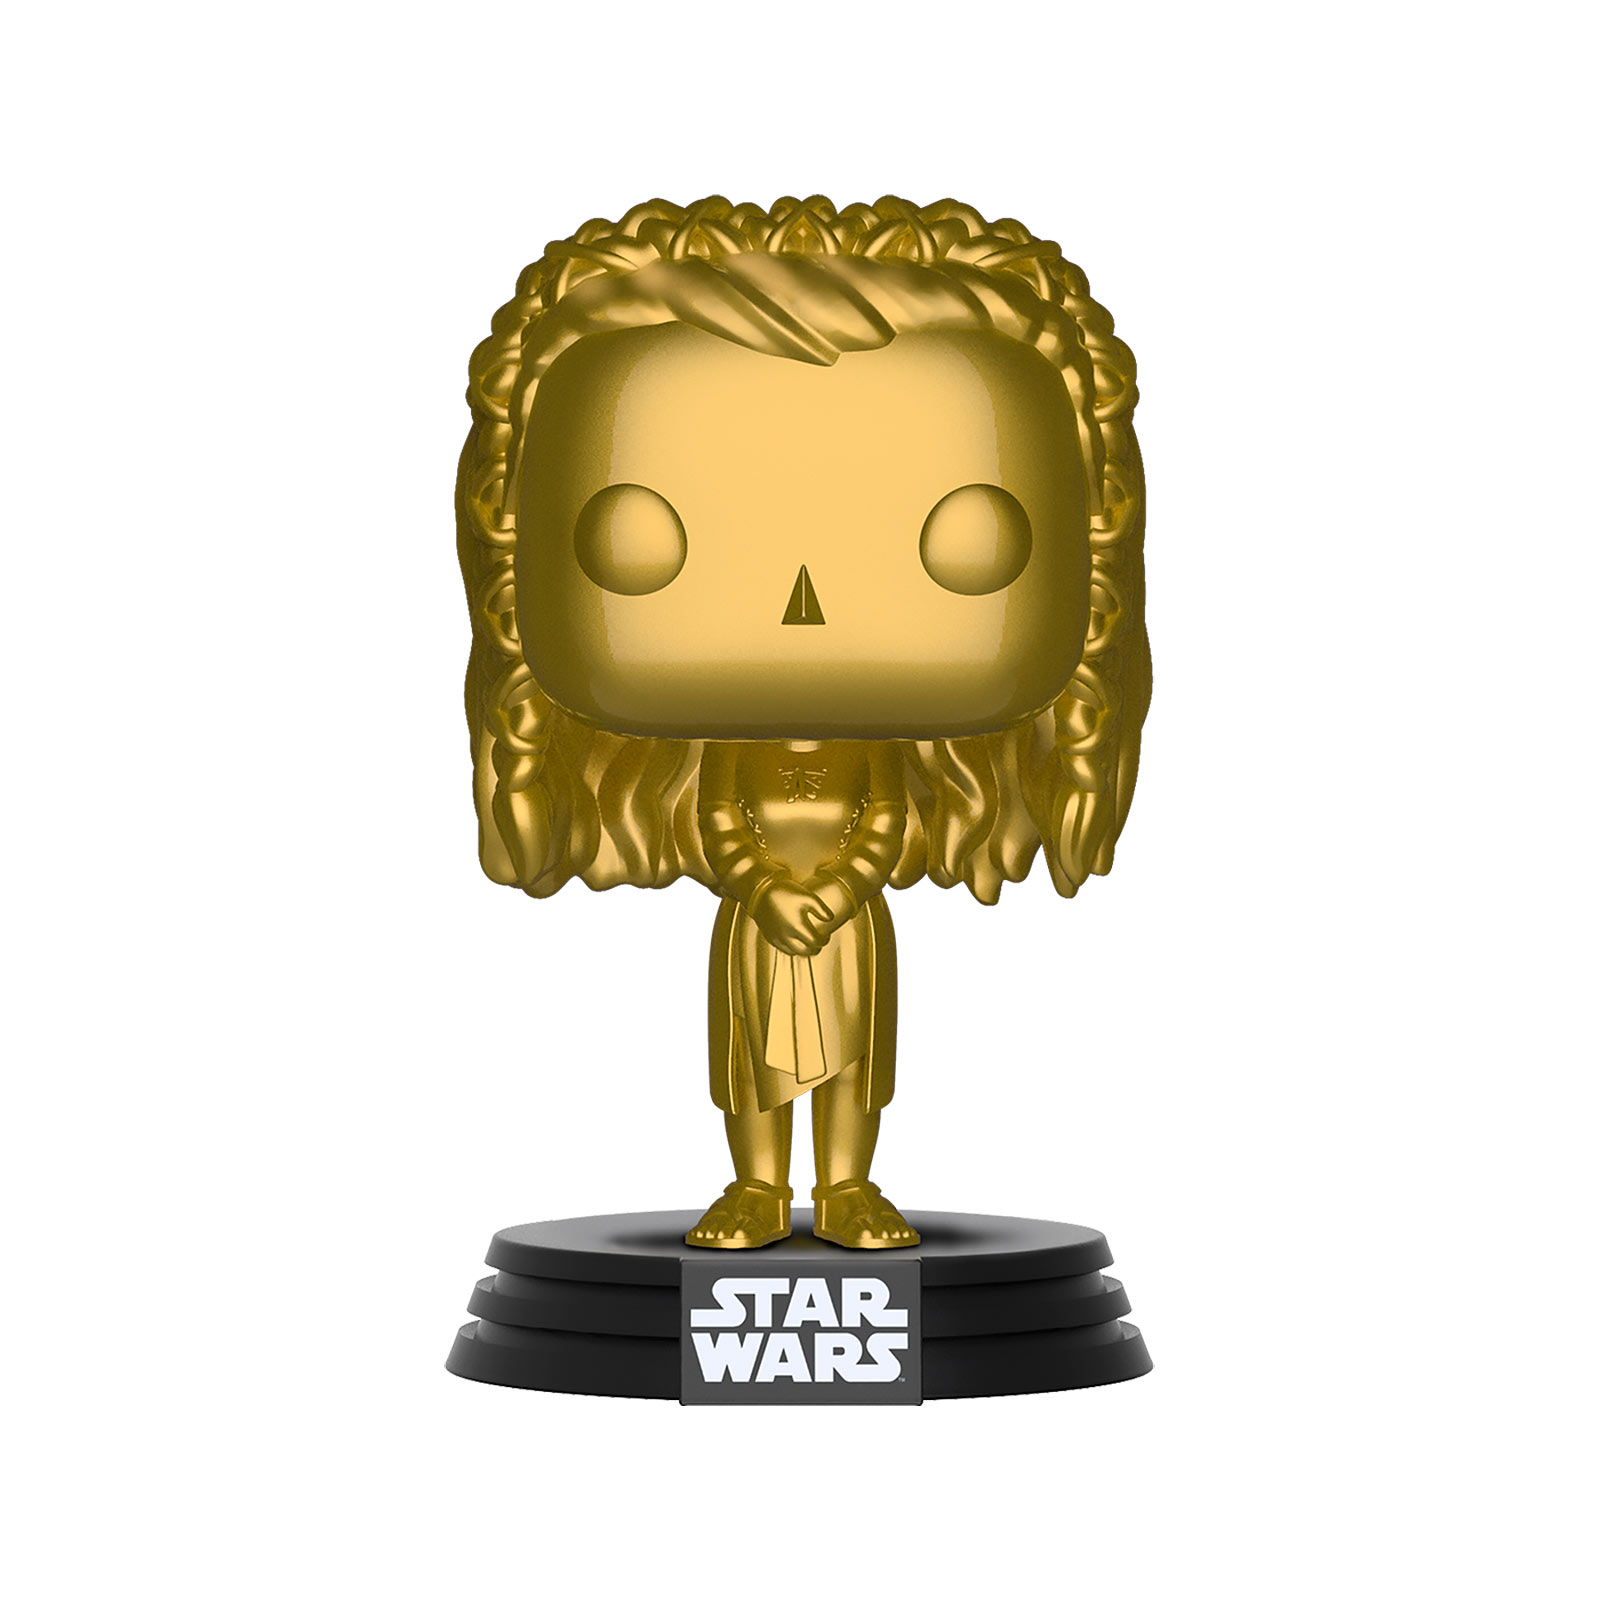 Star Wars - Princess Leia Gold Funko Pop bobblehead figure